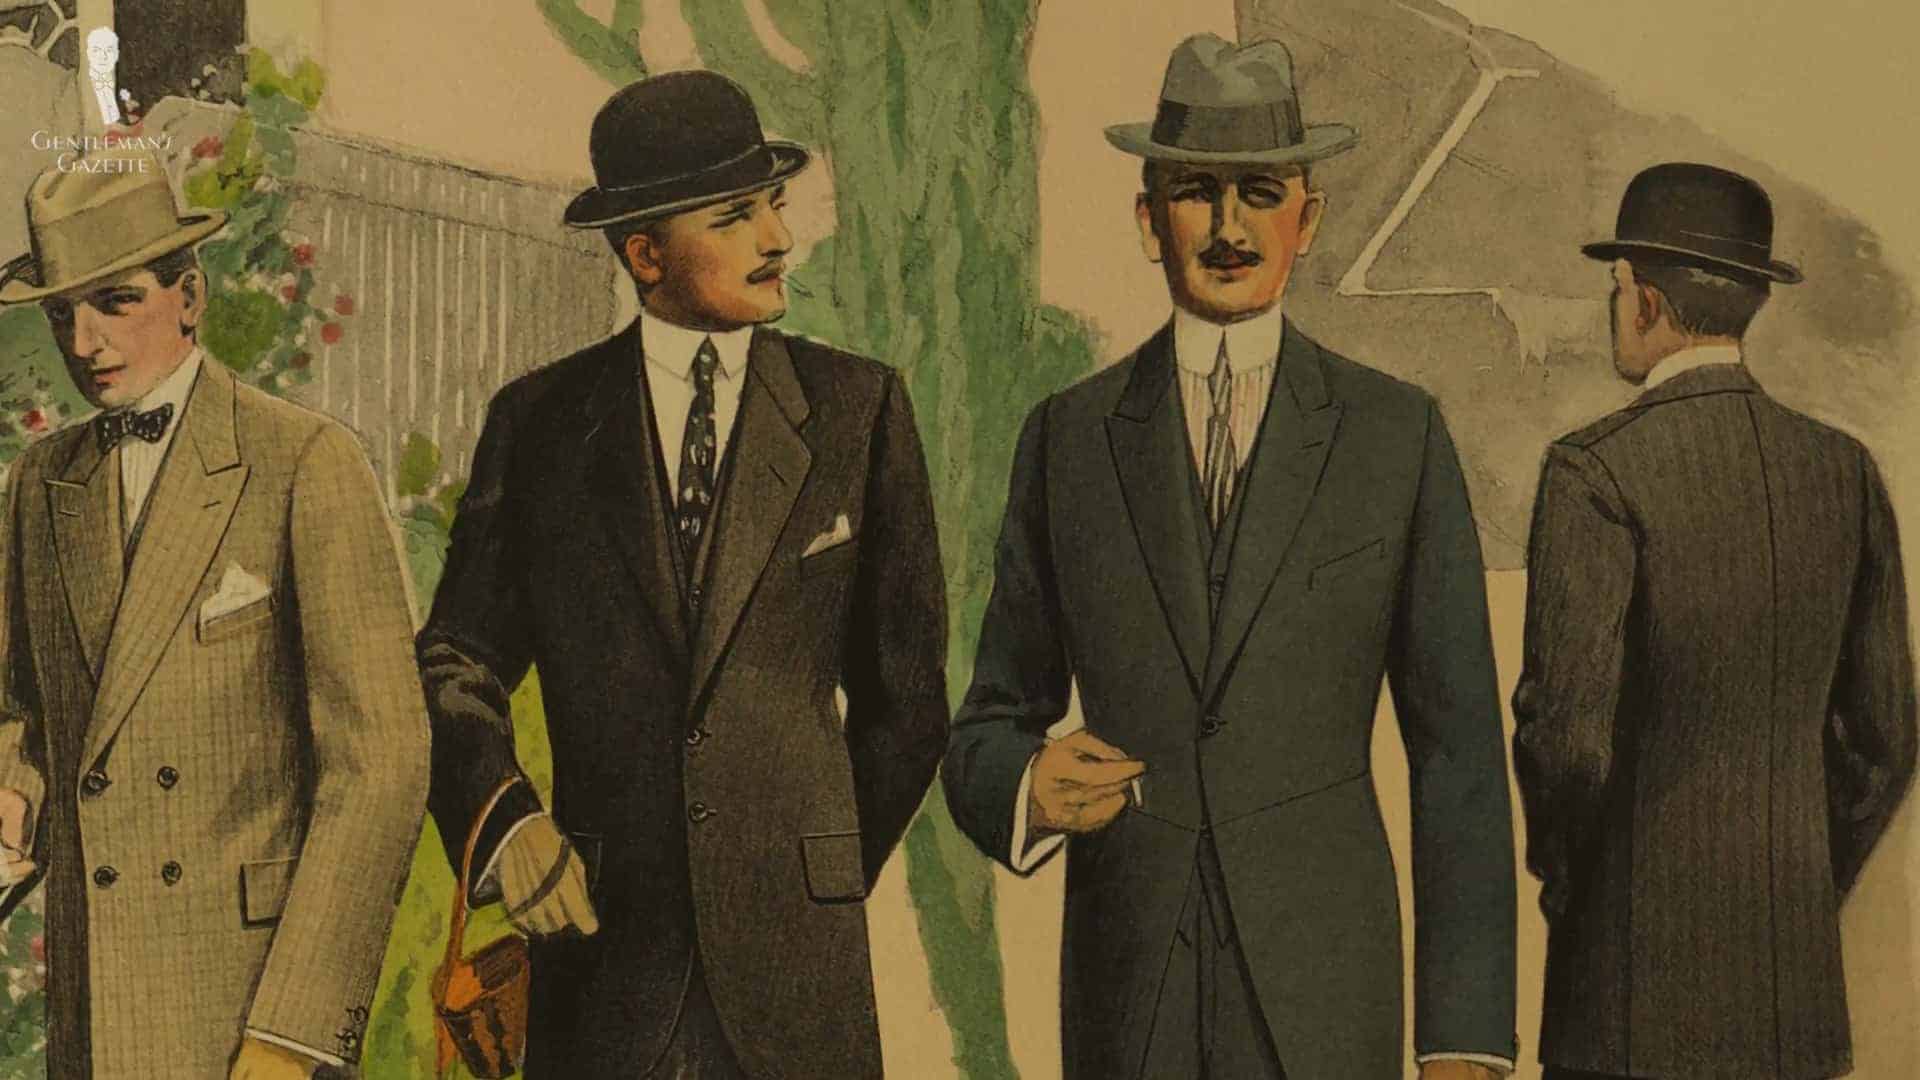 fashion illutration showing gentlemen with mustache